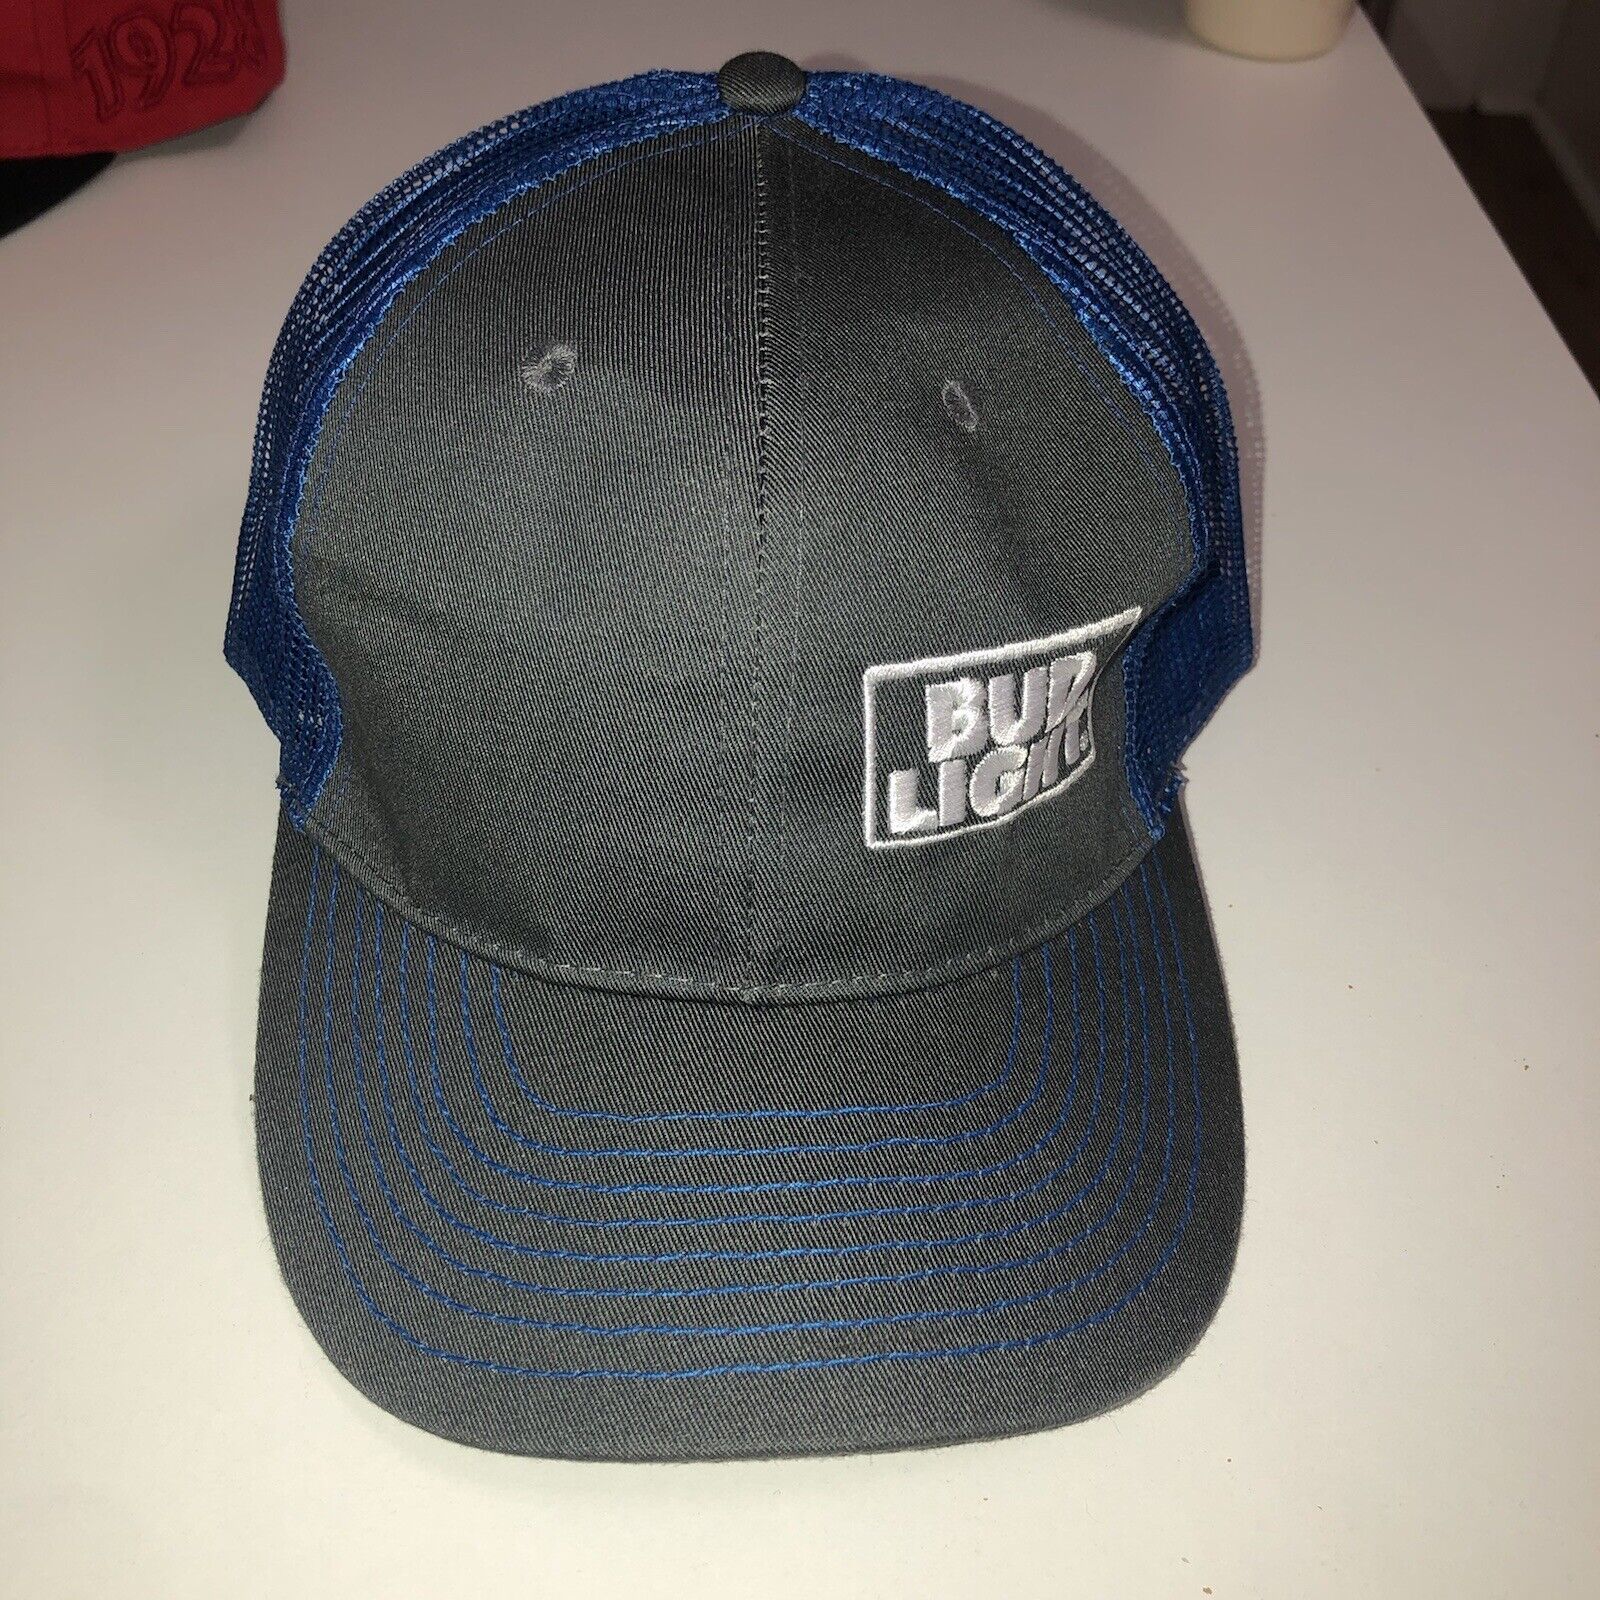 Primary image for Vintage Bud Light Beer Trucker Hat Mesh Snapback Blue Hit Wear